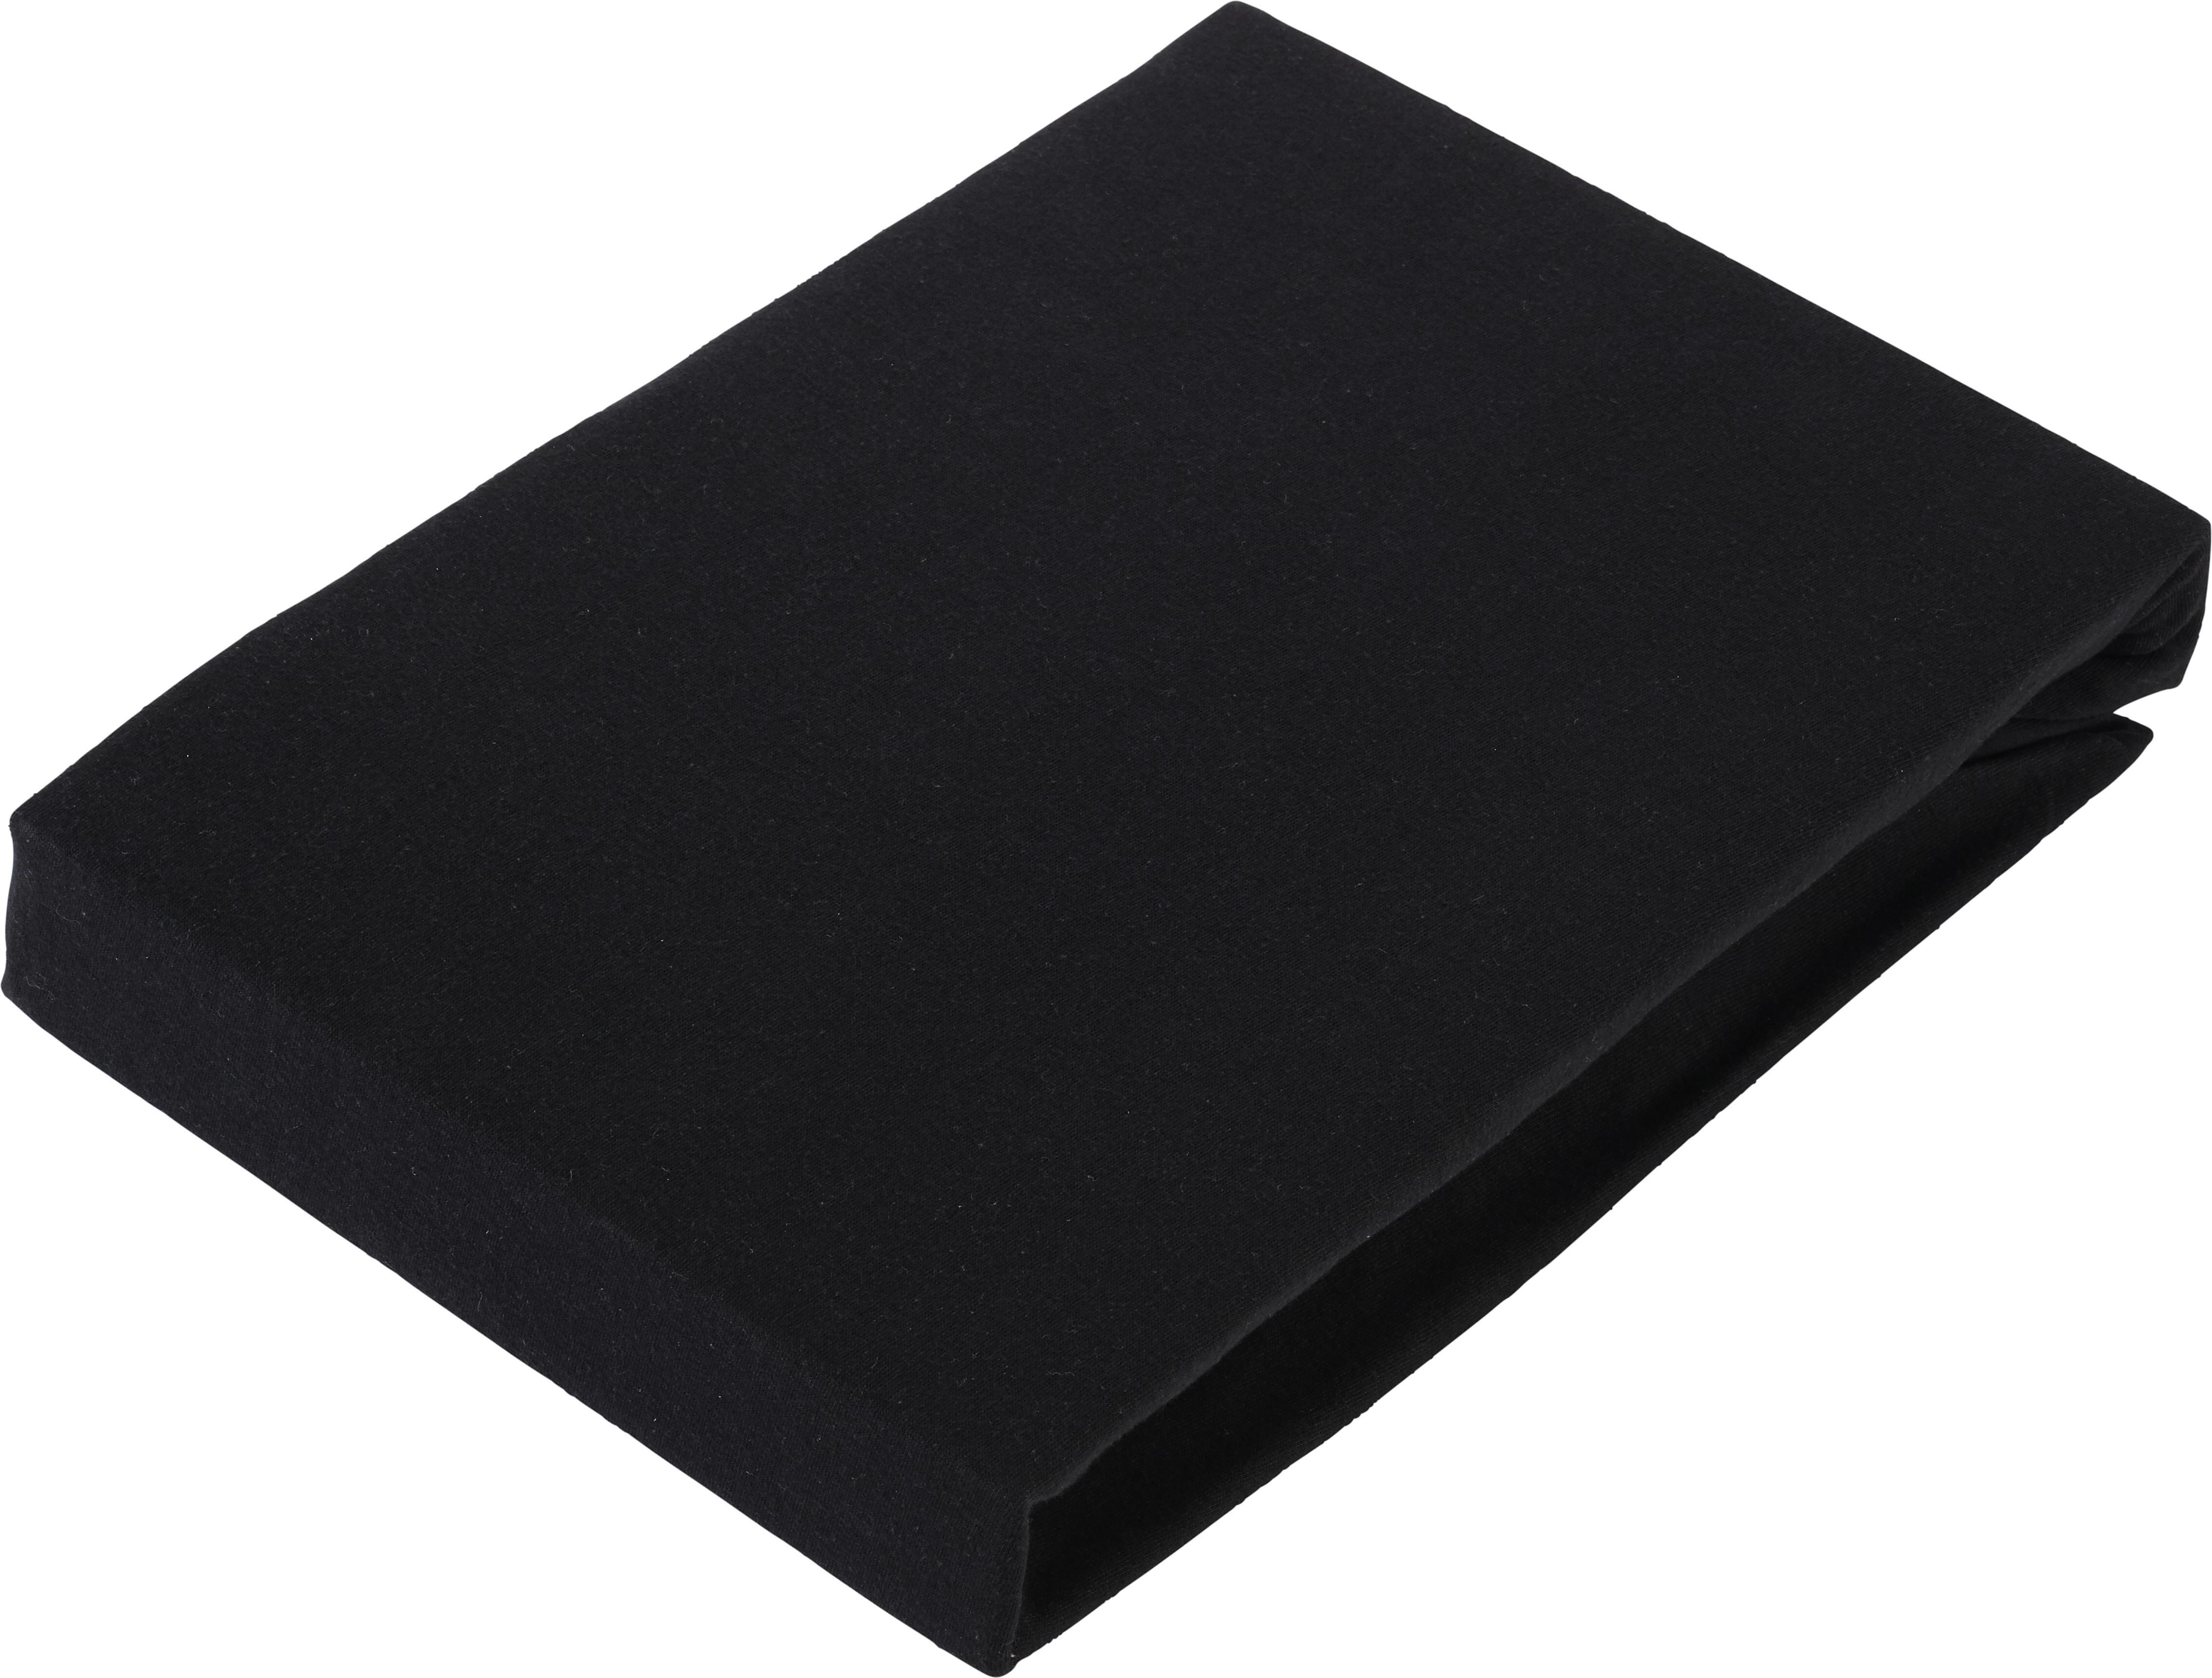 Napenjalna Rjuha Basic - črna, tekstil (150/200cm) - Modern Living